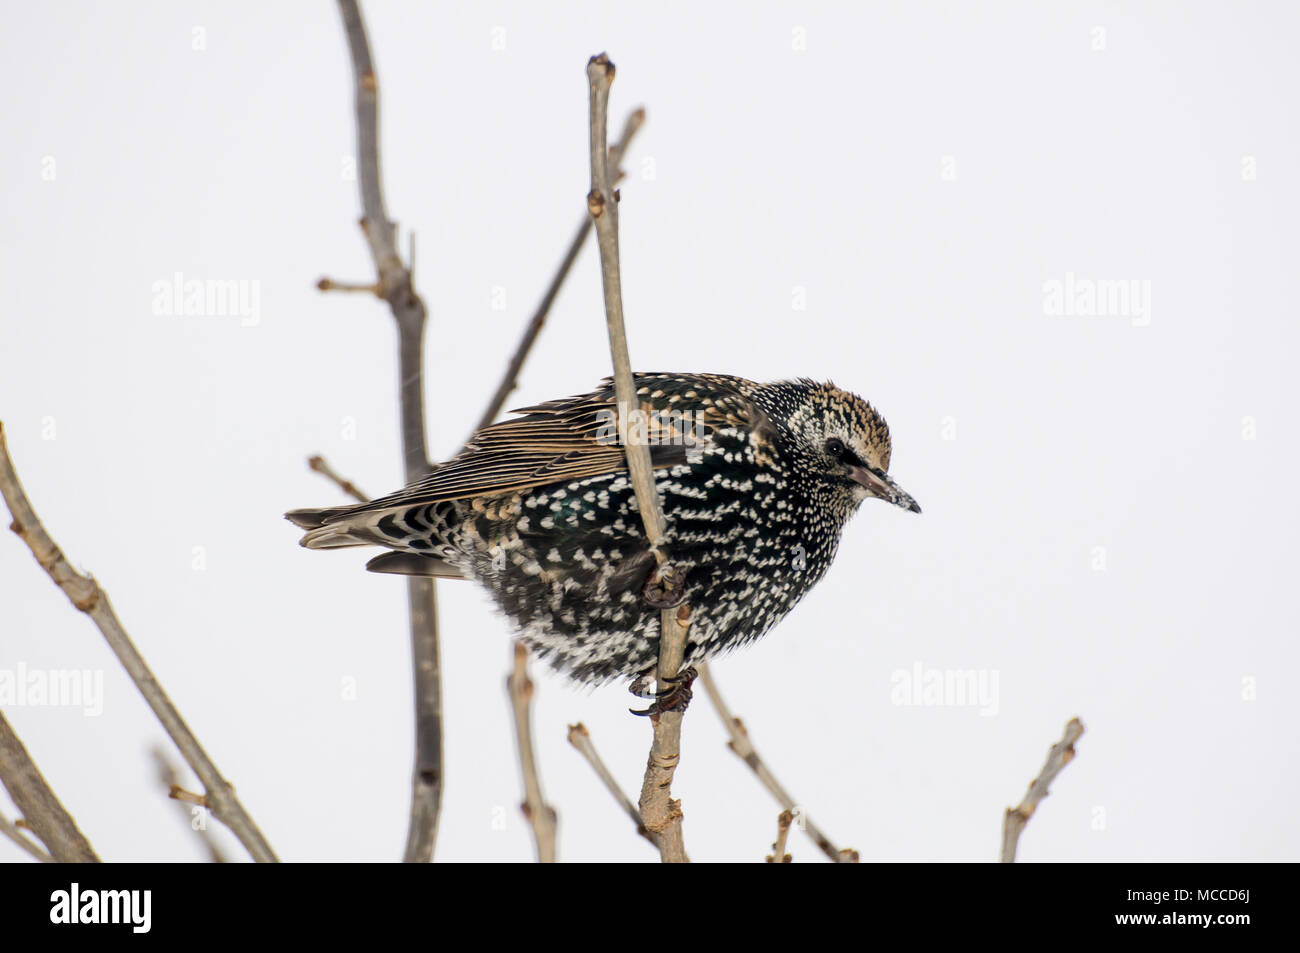 Vadnais Heights, Minnesota. Europäischen Starling, Sturnus vulgaris im Winter mit Winter Mantel aus Federn. Stockfoto